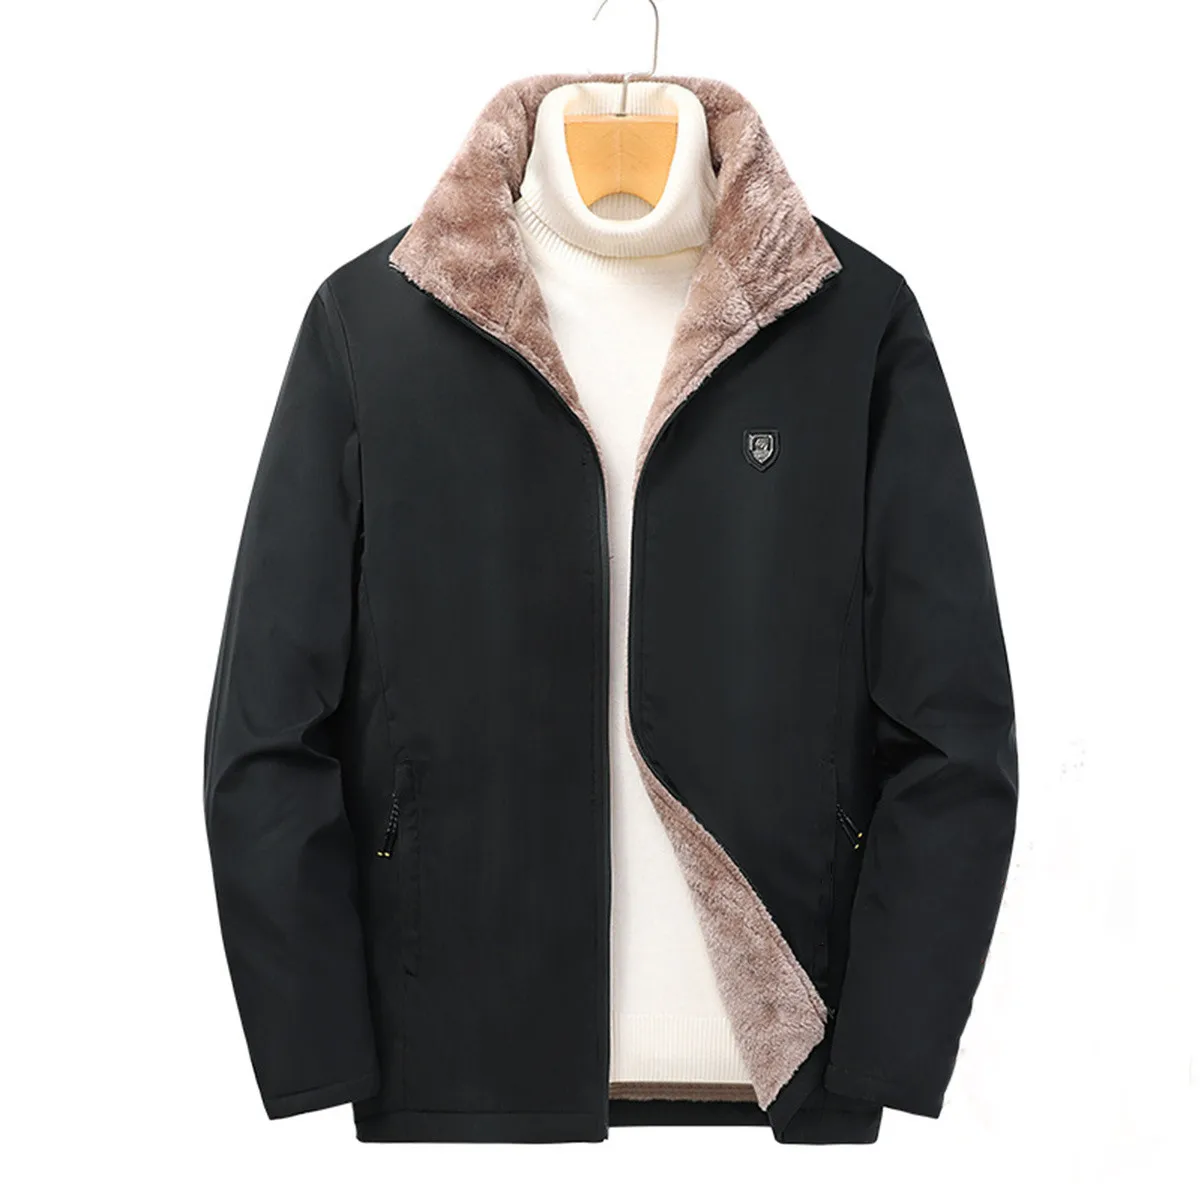 Men Winter Warm Cotton Thick Fleece Jacket Coat Casual Outwear Outdoor ...